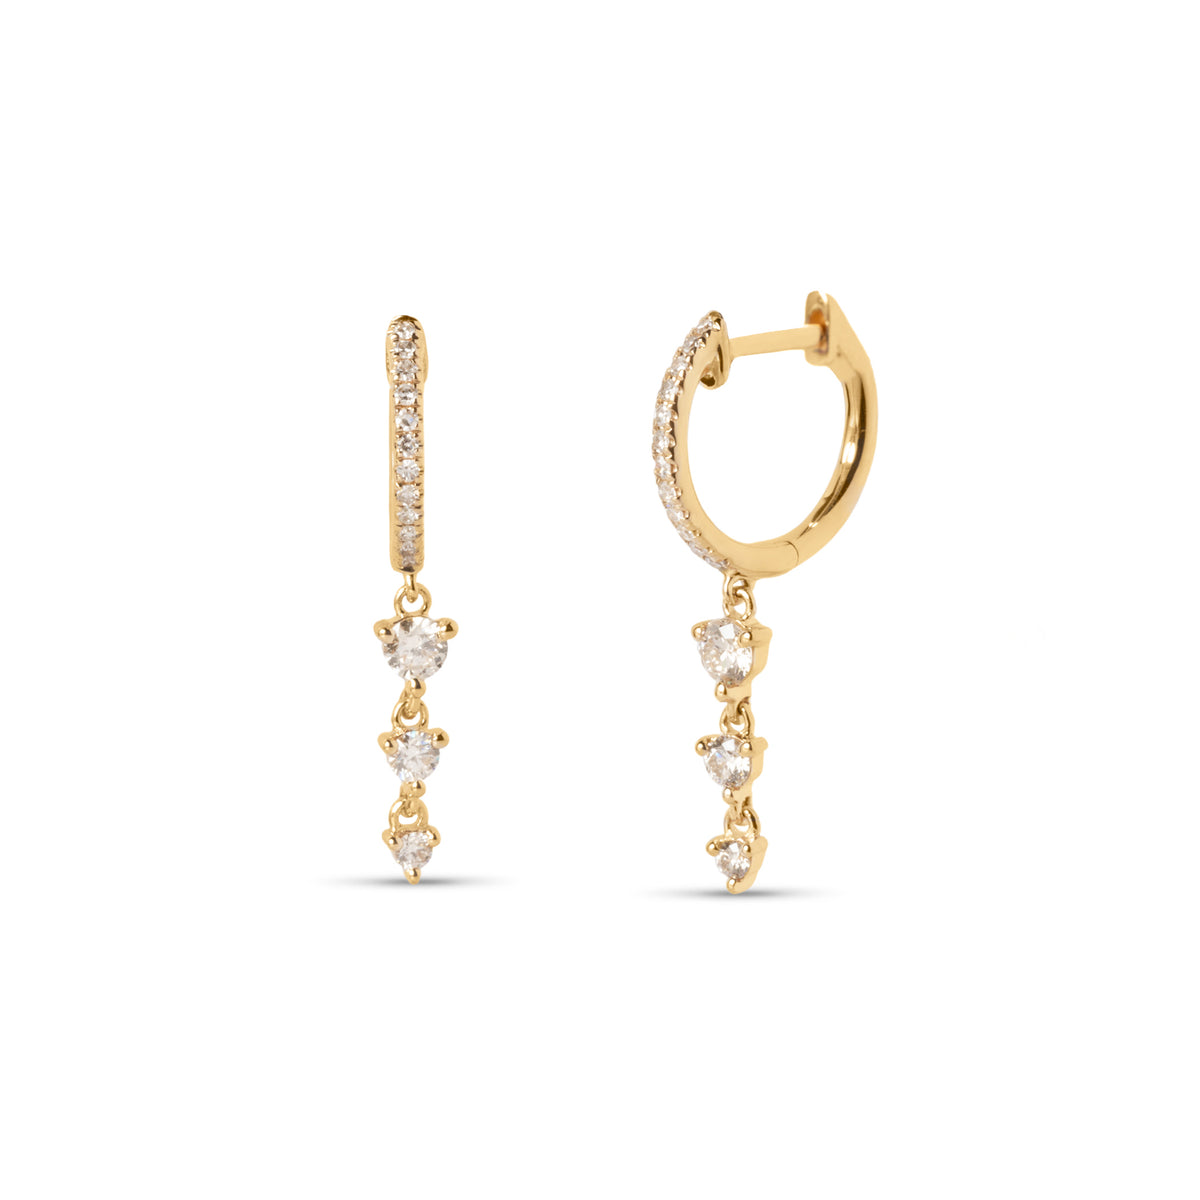 14k yellow gold diamond huggie earrings with three drop diamonds